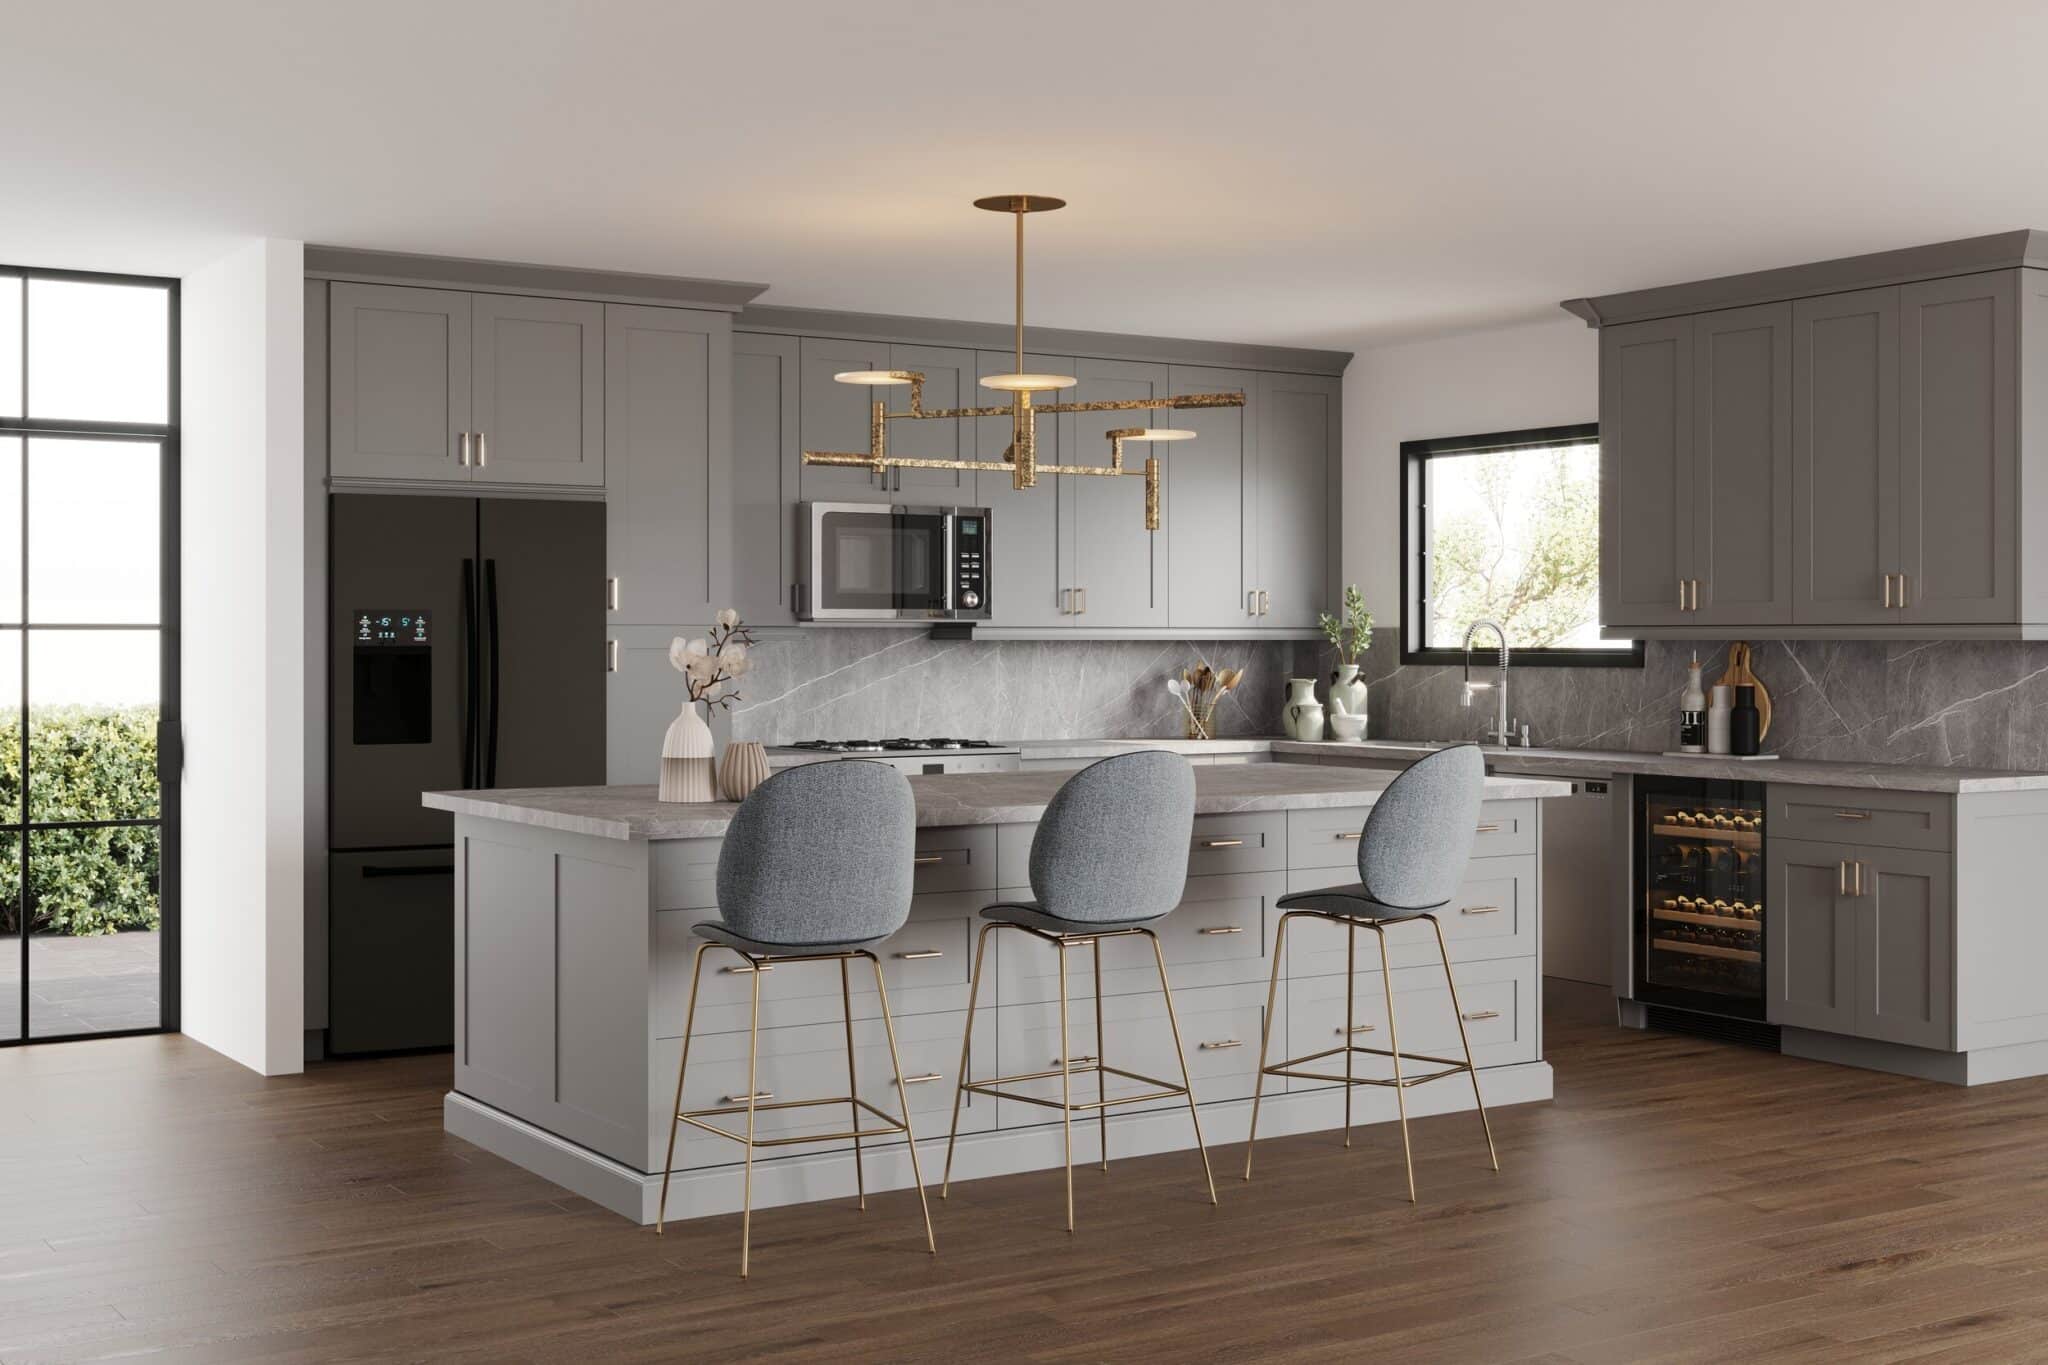 Adornus Grey kitchen cabinets with white countertop